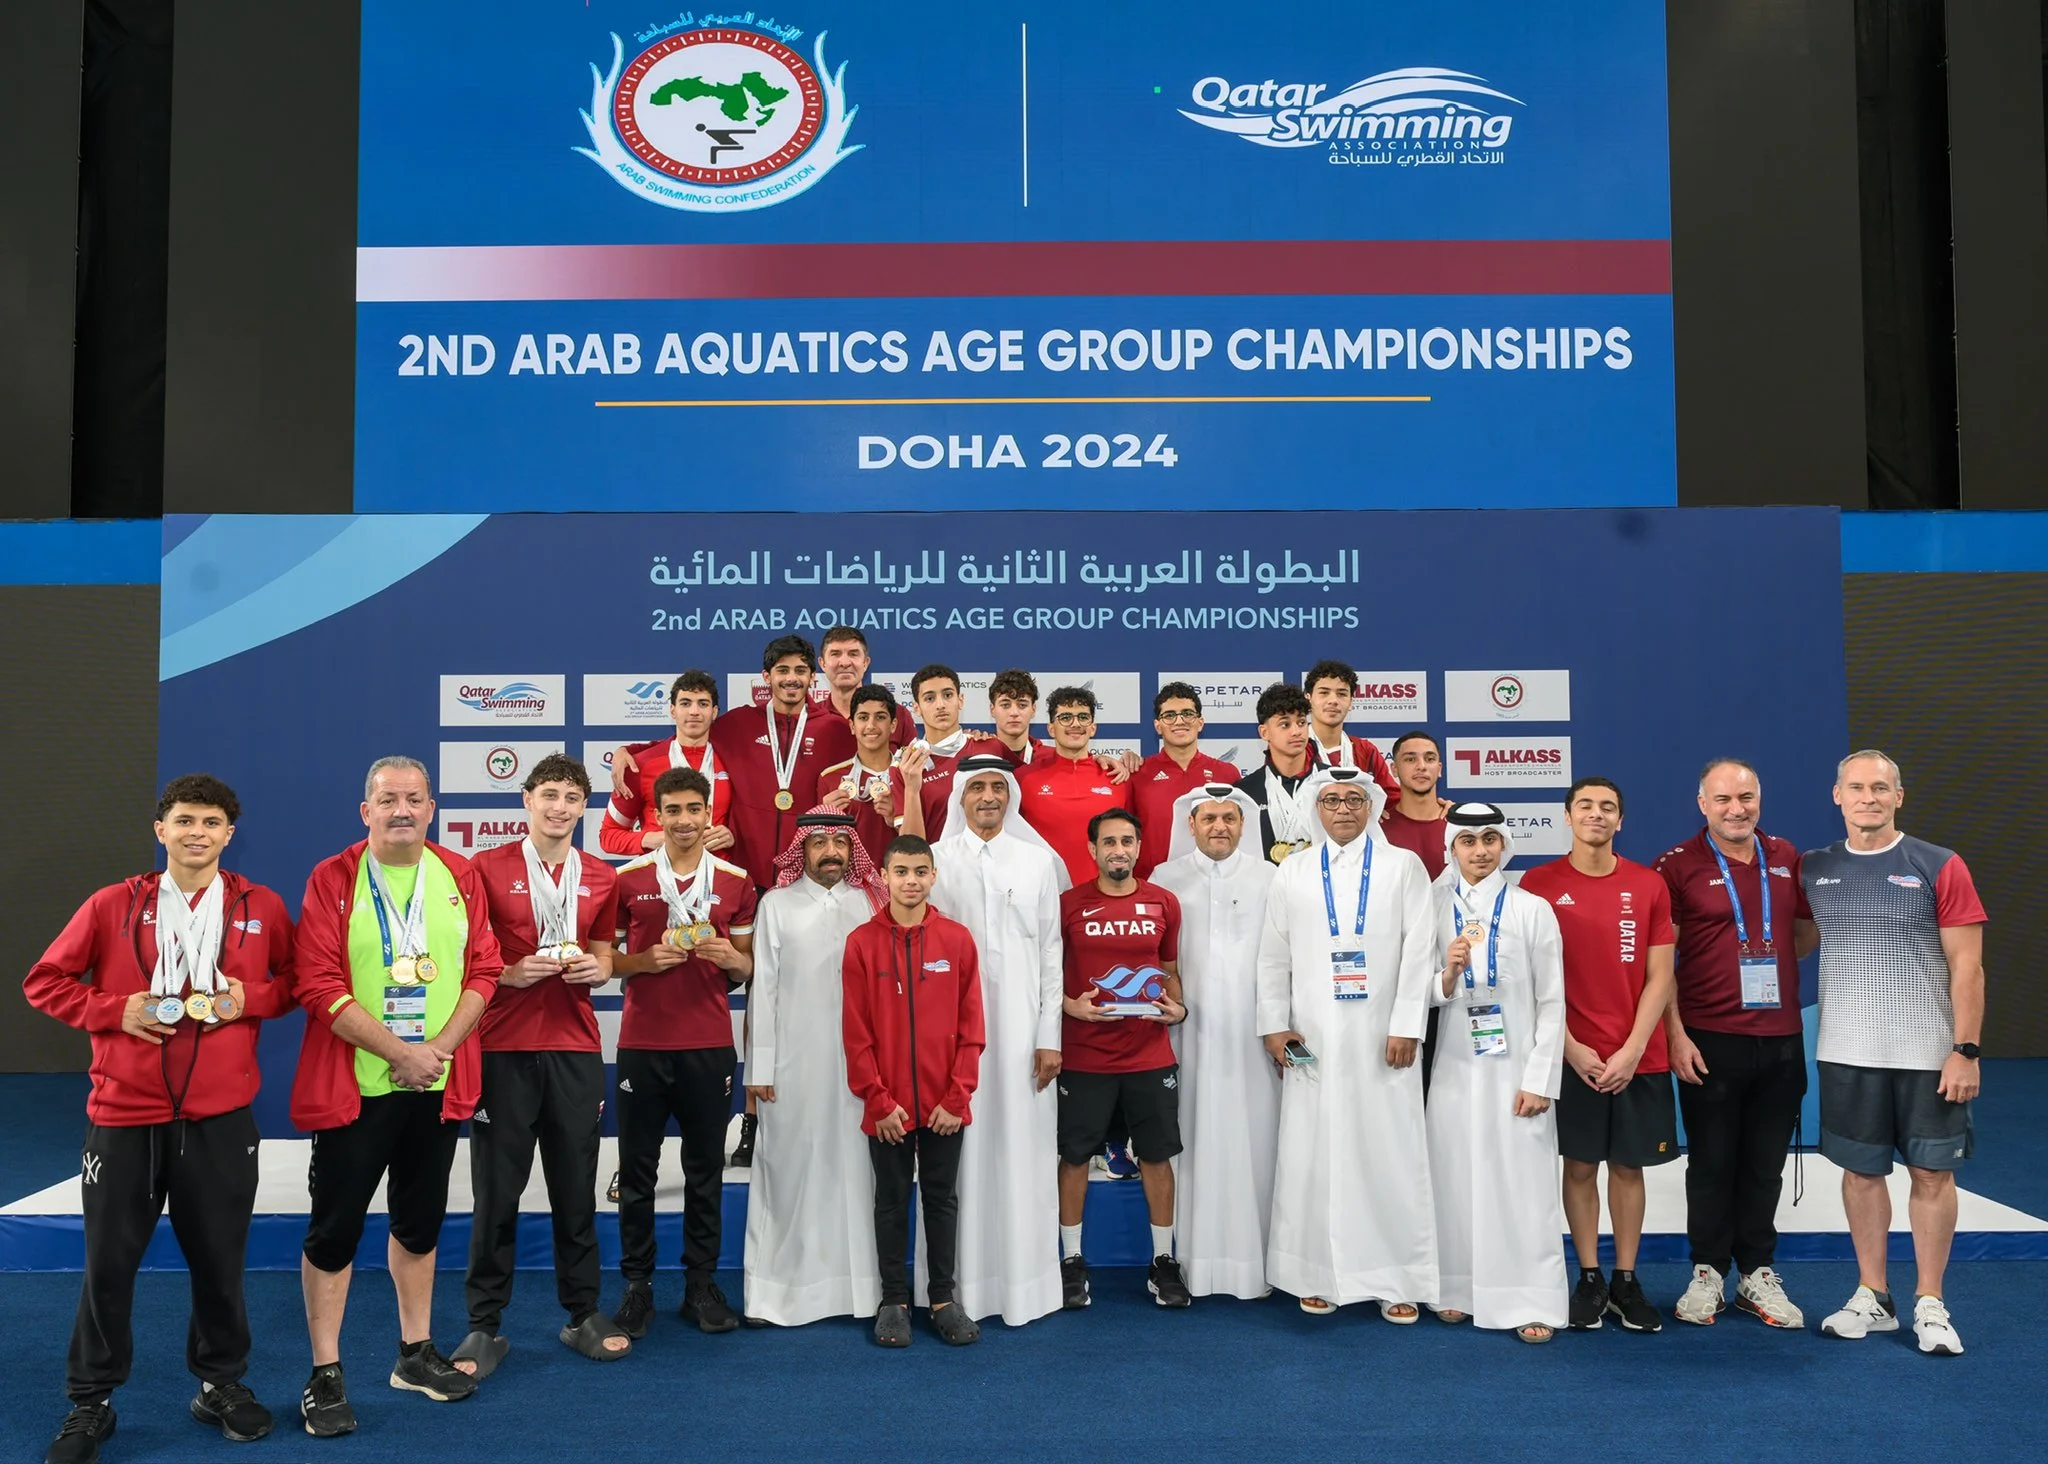 Qatar Swimmers Wins First Place at Arab Aquatics Age Group Championships